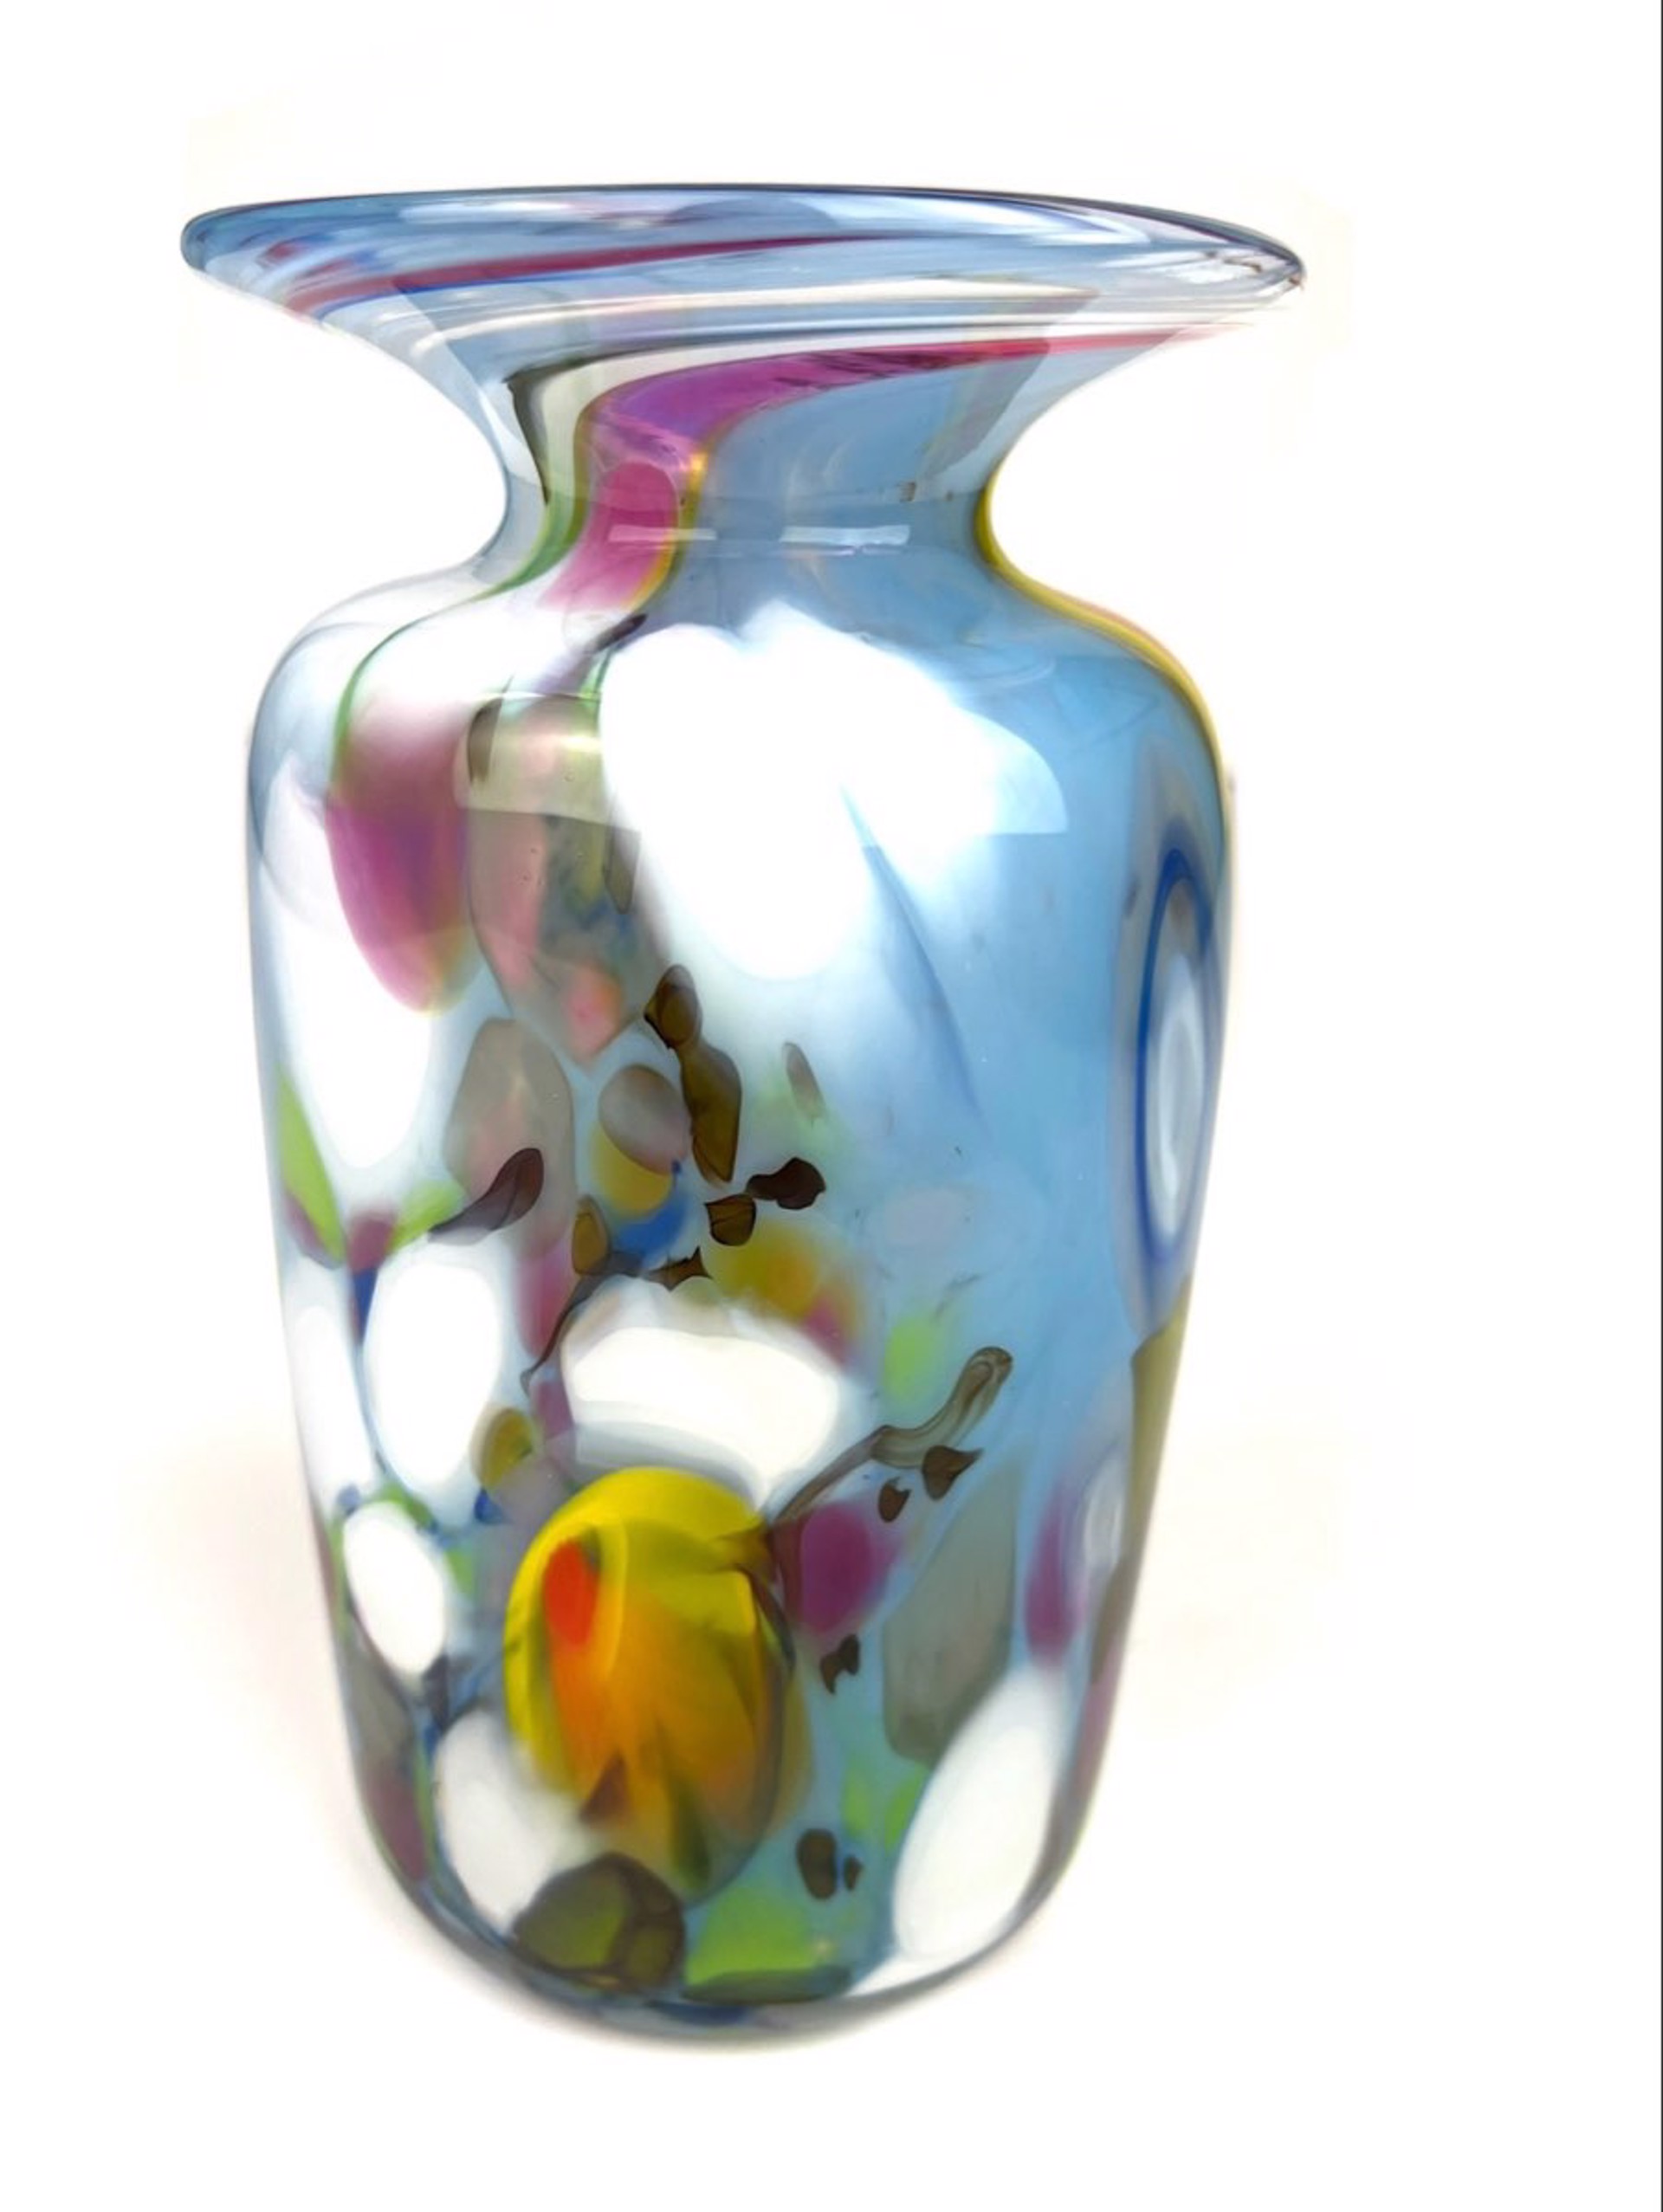 Florette Vase by Chad Balster